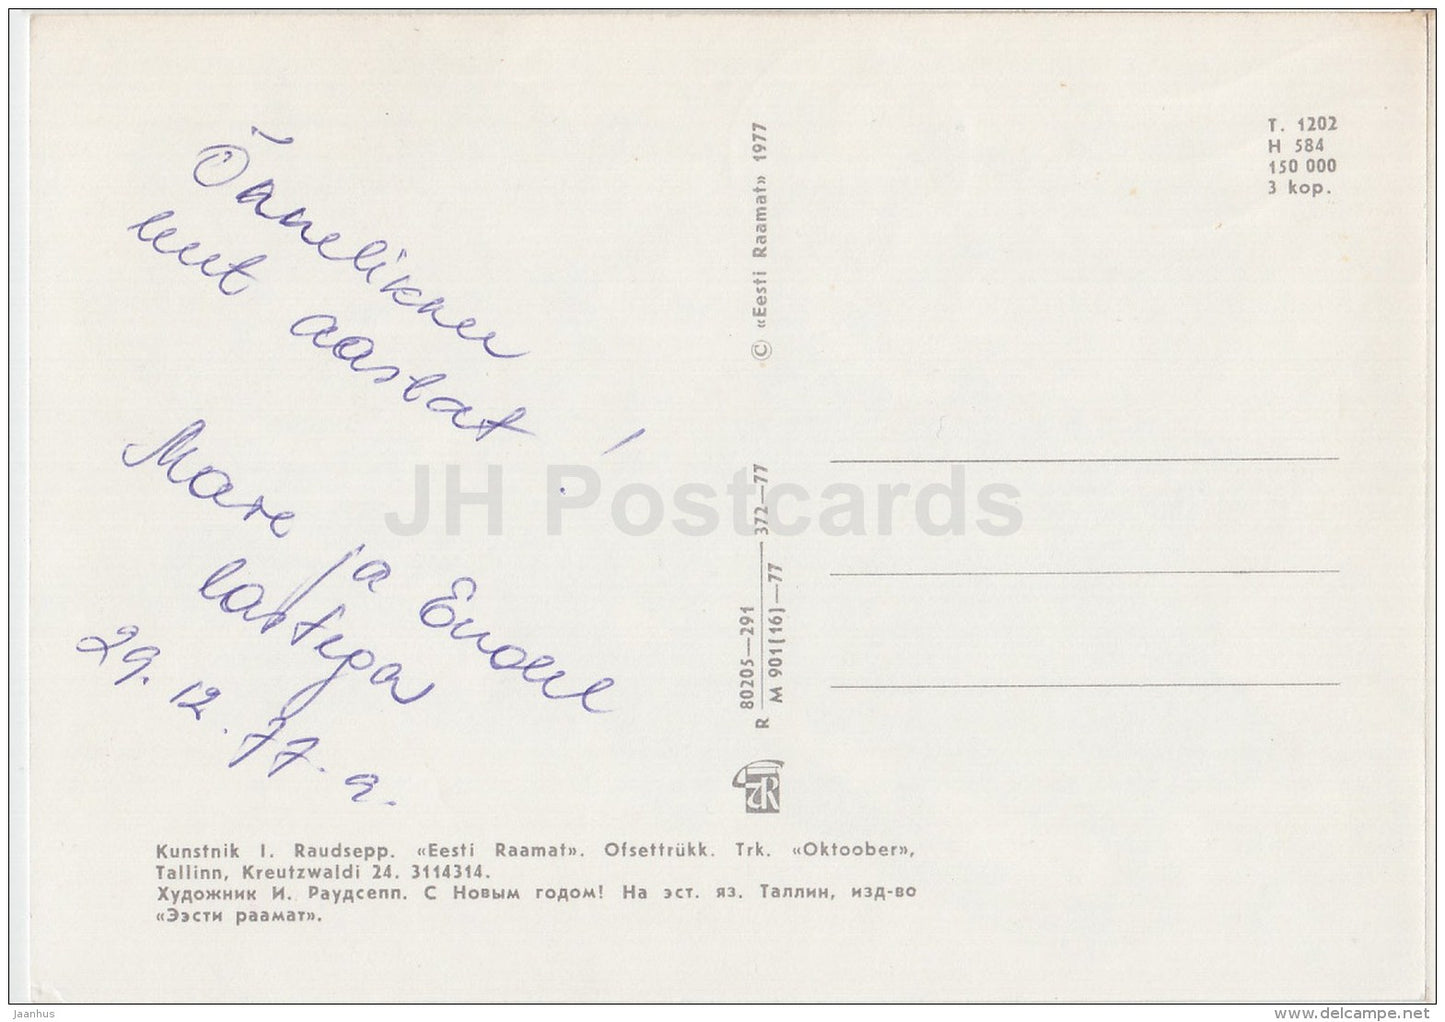 New Year Greeting Card by I. Raudsepp - children - sledge - 1977 - Estonia USSR - used - JH Postcards